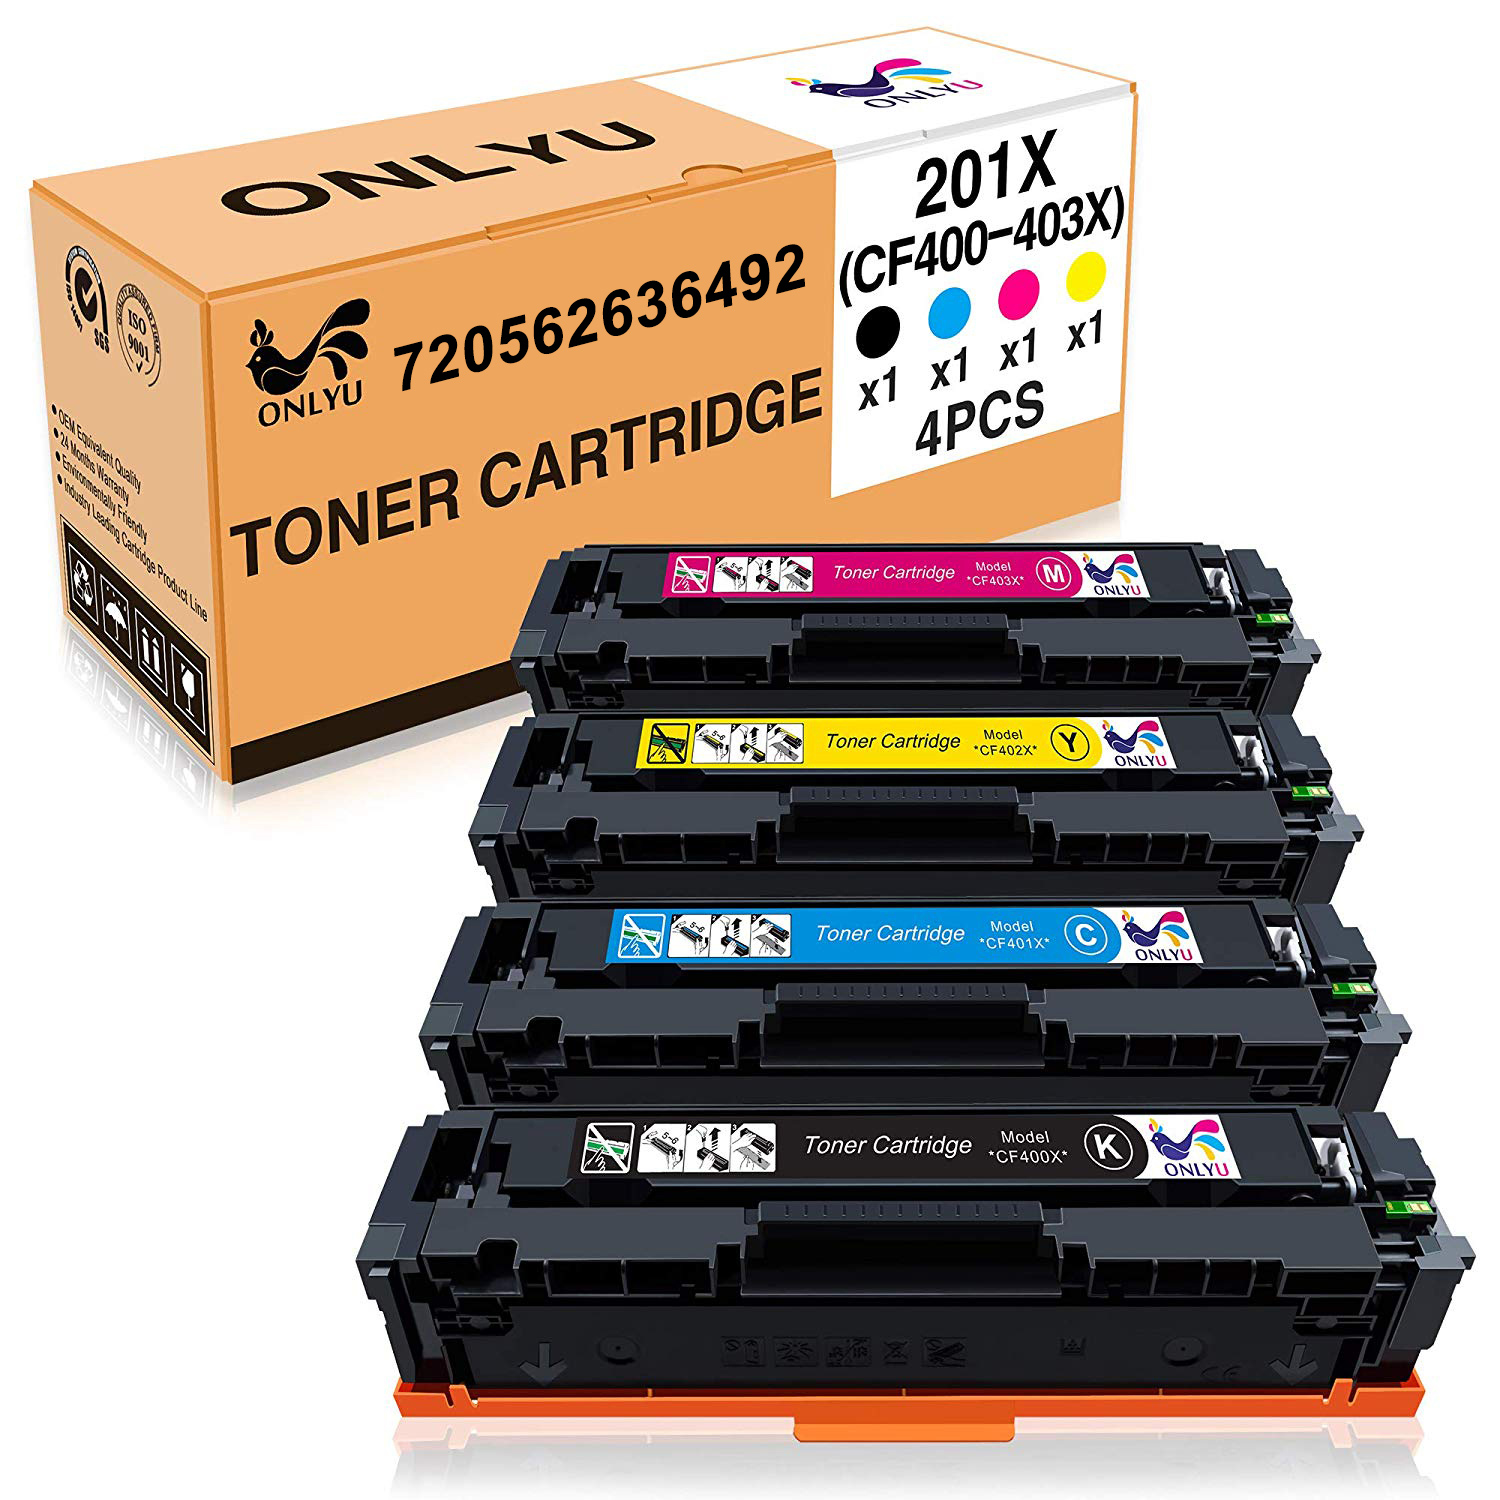 ONLYU Compatible Toner Cartridge Replacement for HP 201X (CF400X CF401X CF402X CF403X) for HP Color Laserjet Pro MFP M277dw MFP M277n MFP M277c6 M252dw M252n Printer (4Pack)